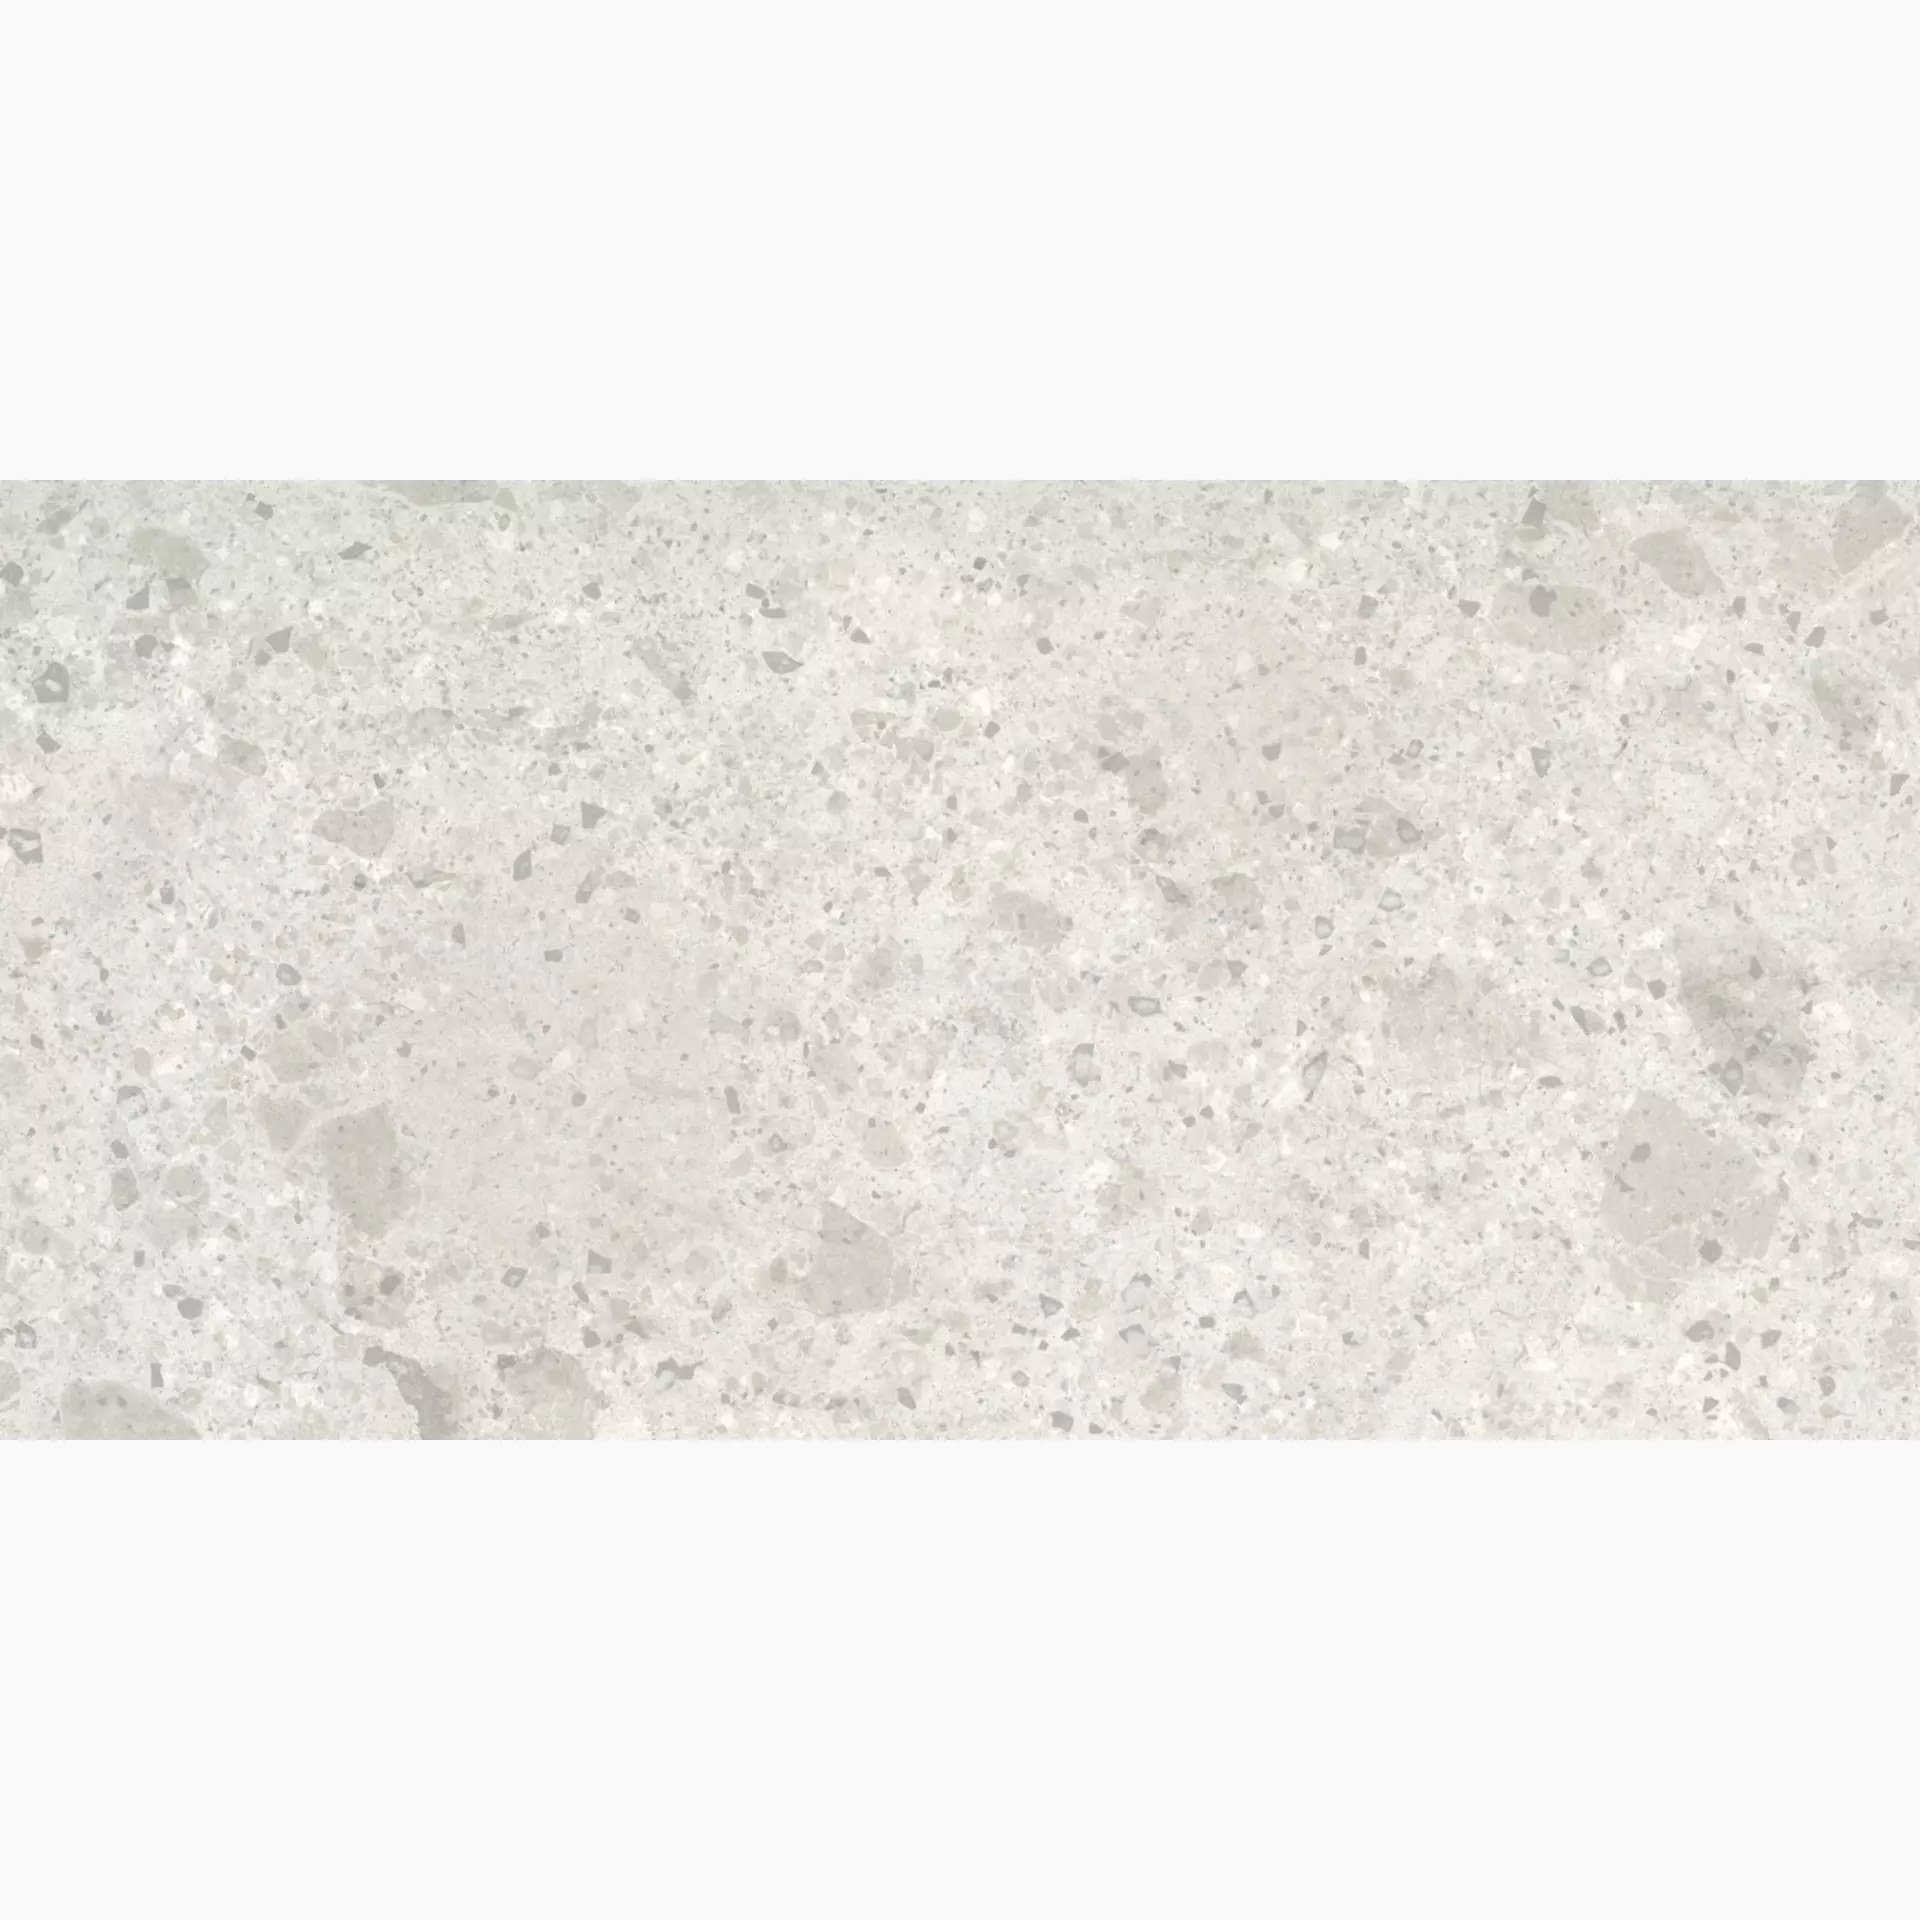 Ariostea Fragmenta Full Body Bianco Greco Soft Bianco Greco P612616 soft 60x120cm 10mm